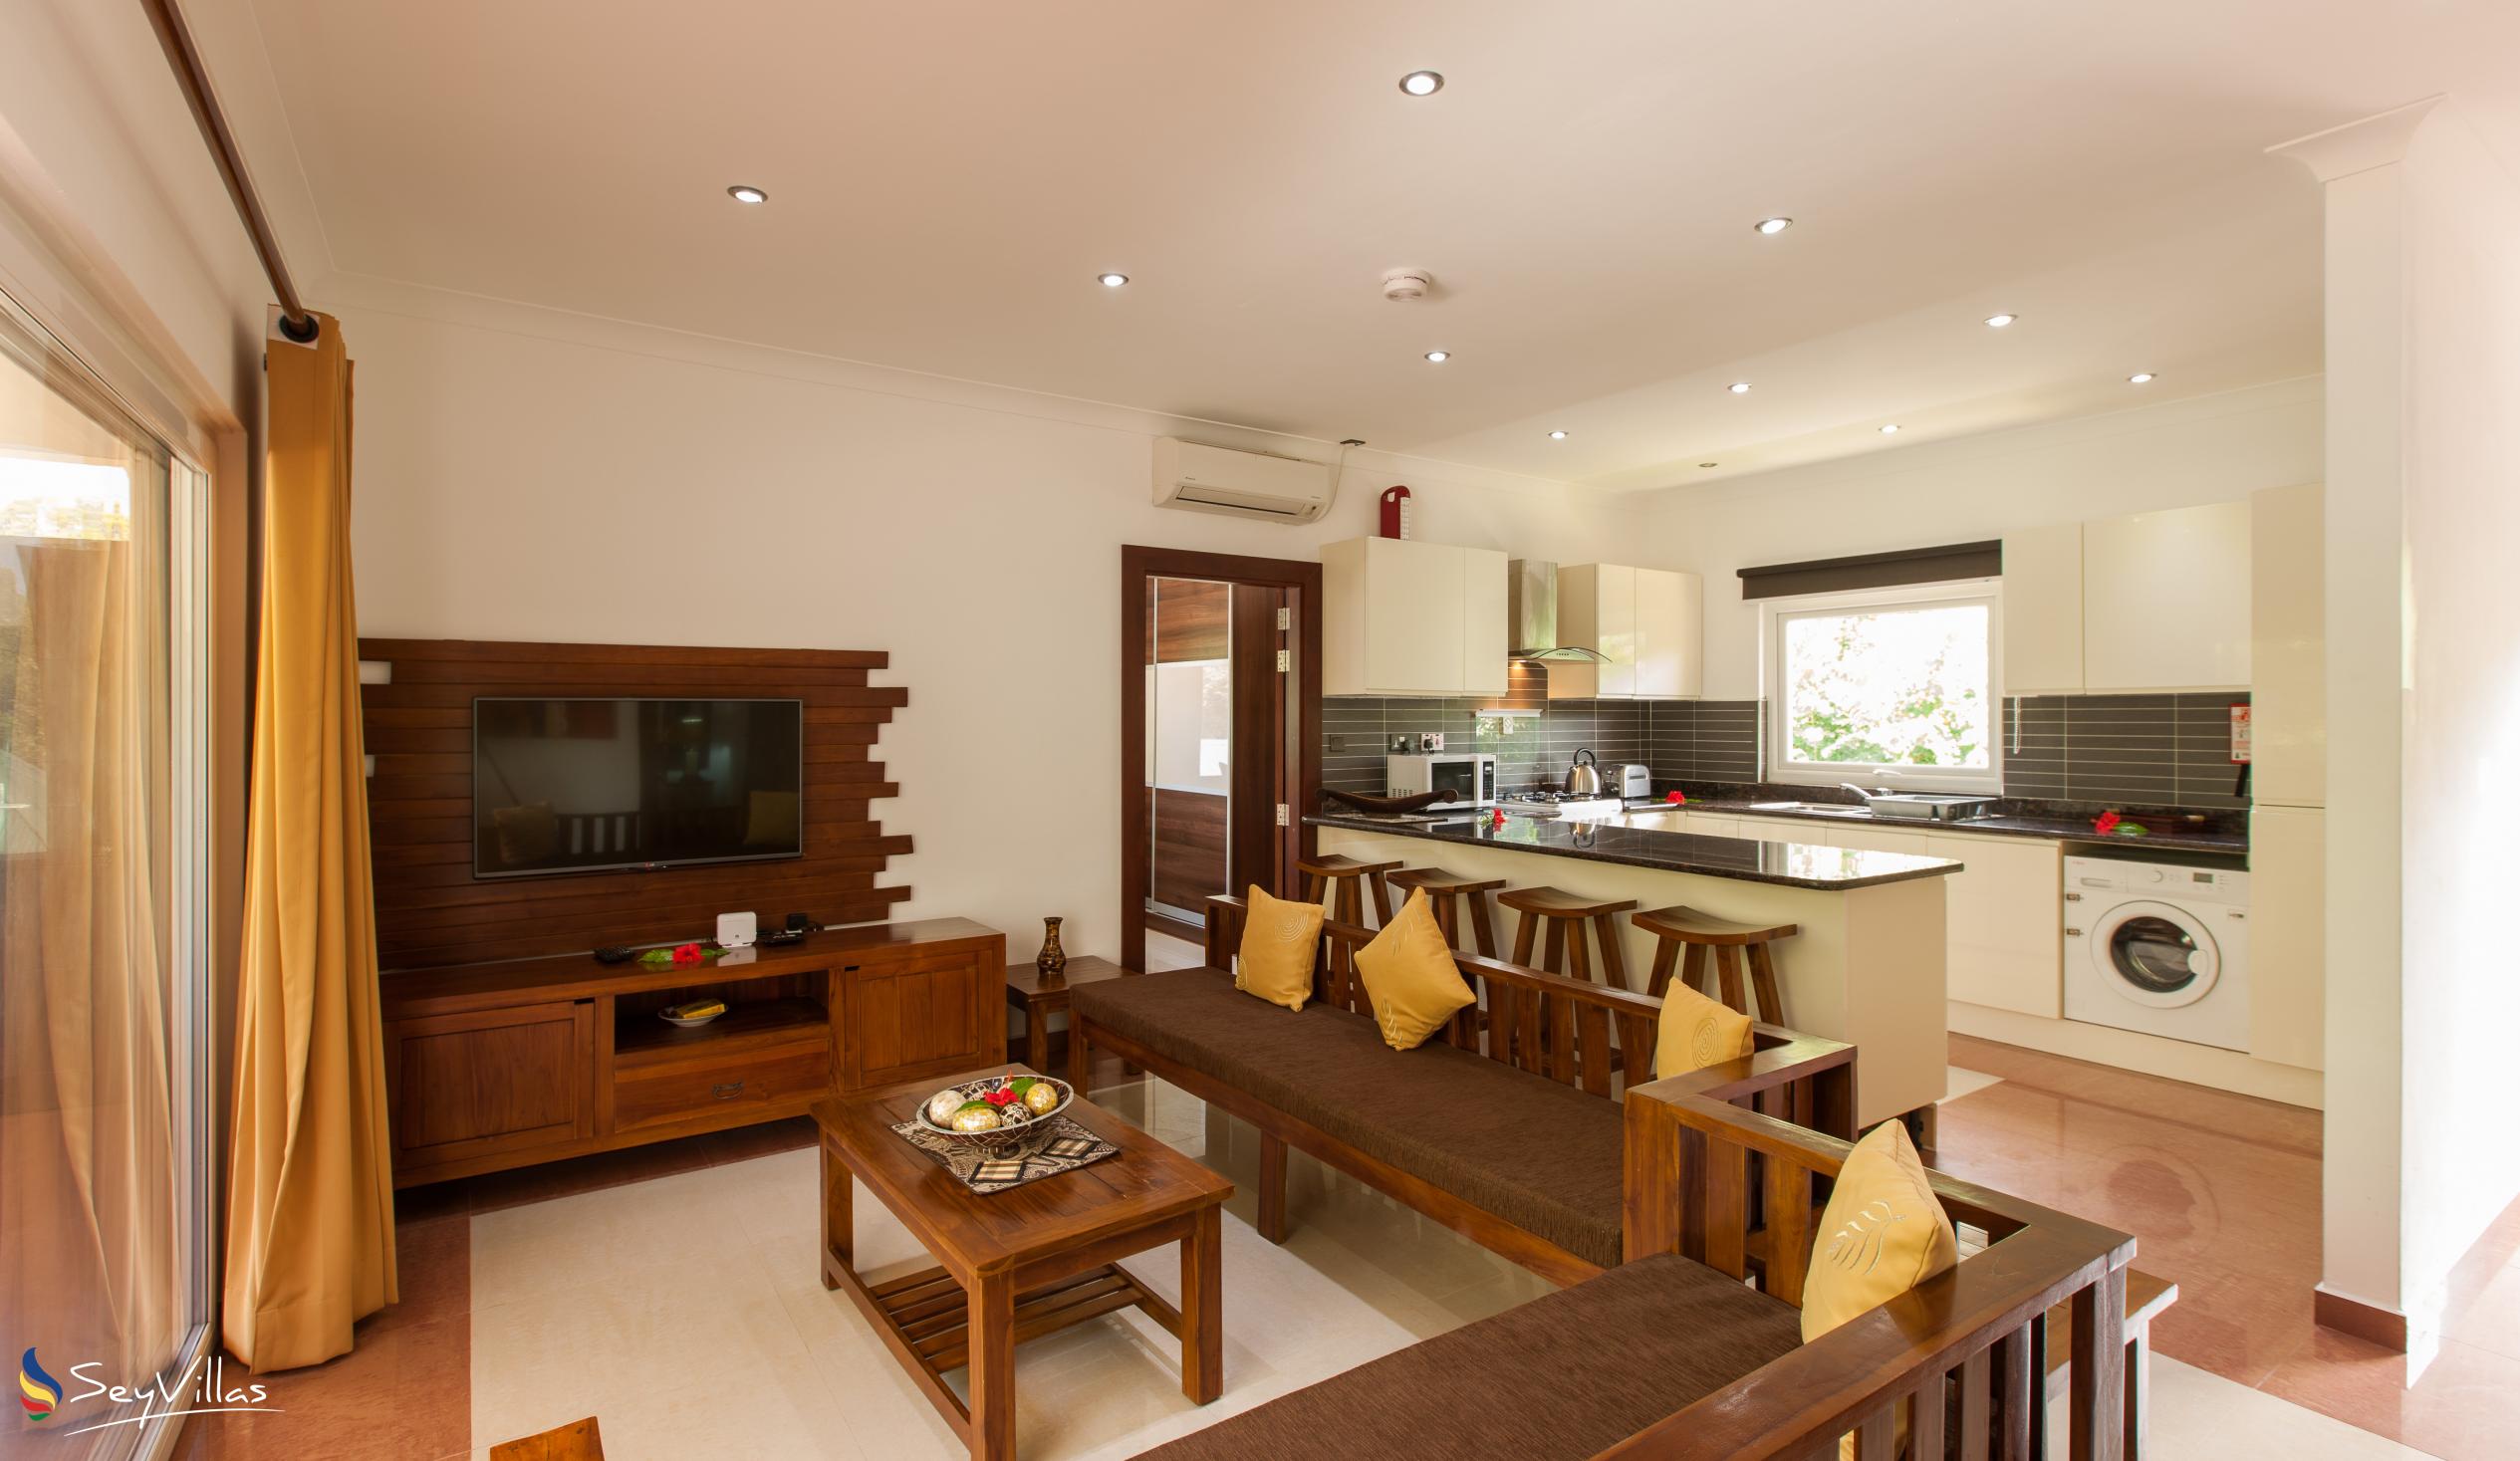 Photo 92: YASAD Luxury Beach Residence - 3-Bedroom Apartment First Floor - Praslin (Seychelles)